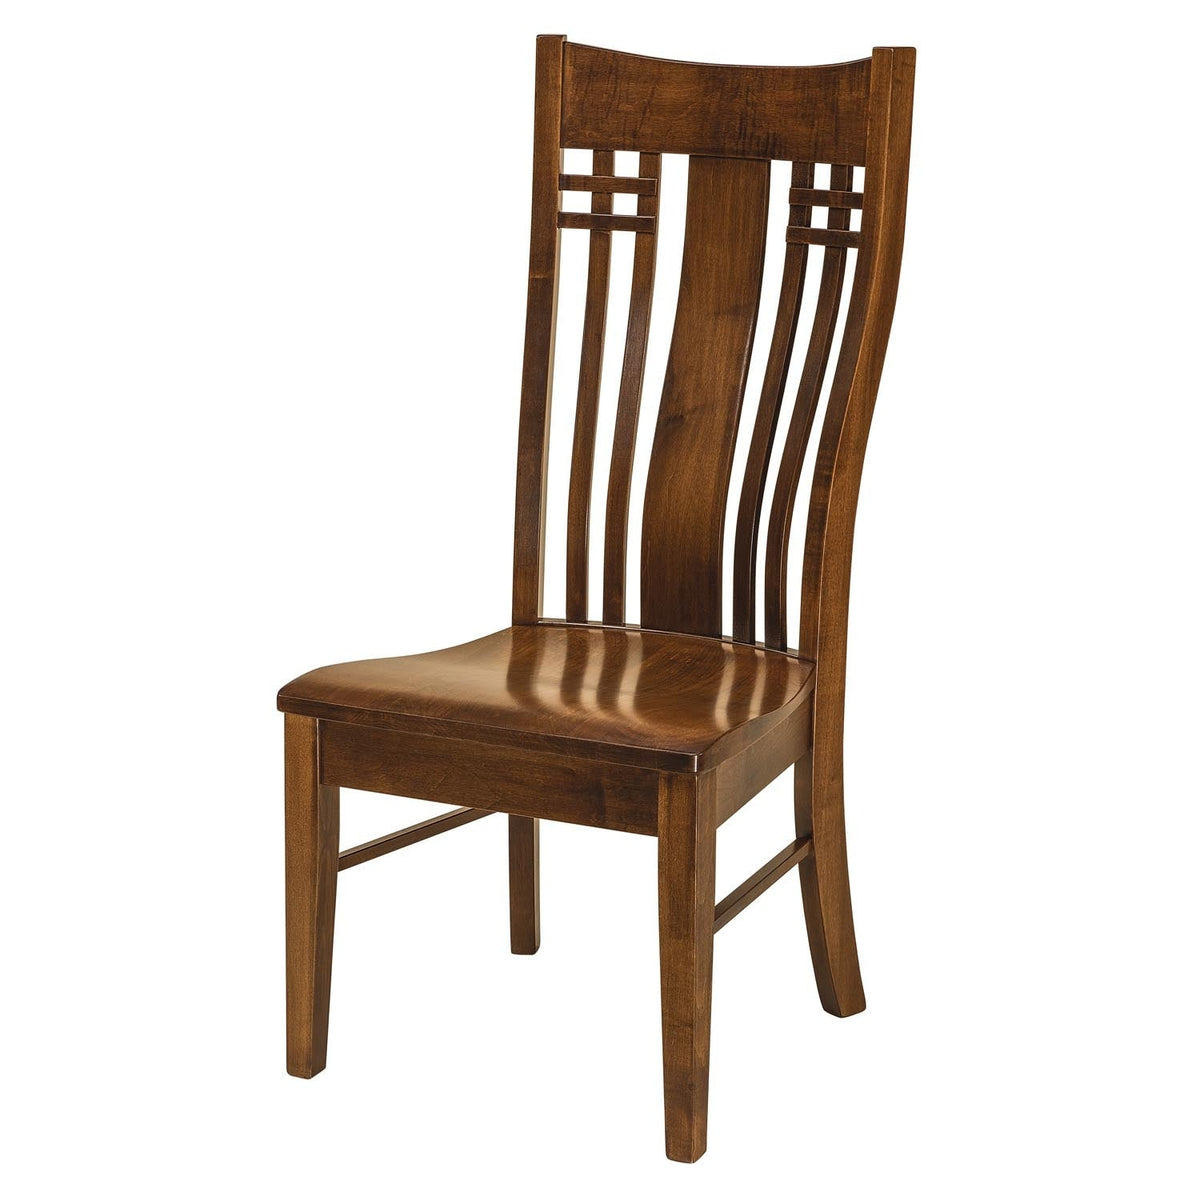 Bennett Chair - snyders.furniture